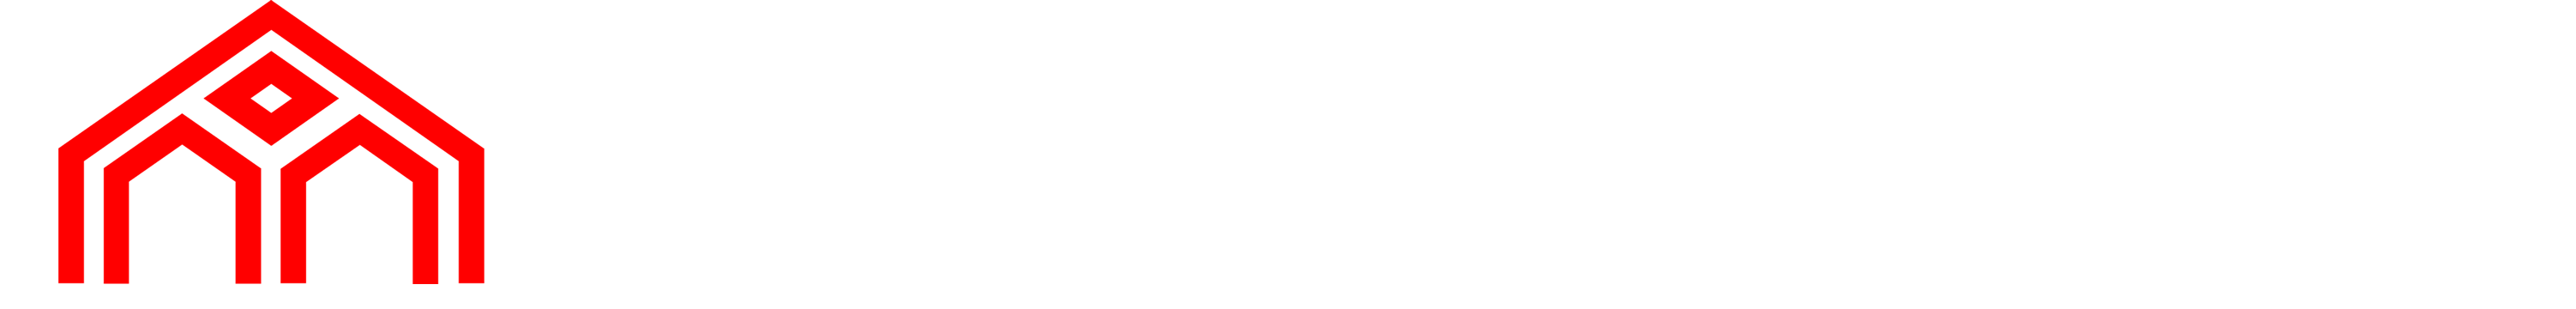 mingyang-logo